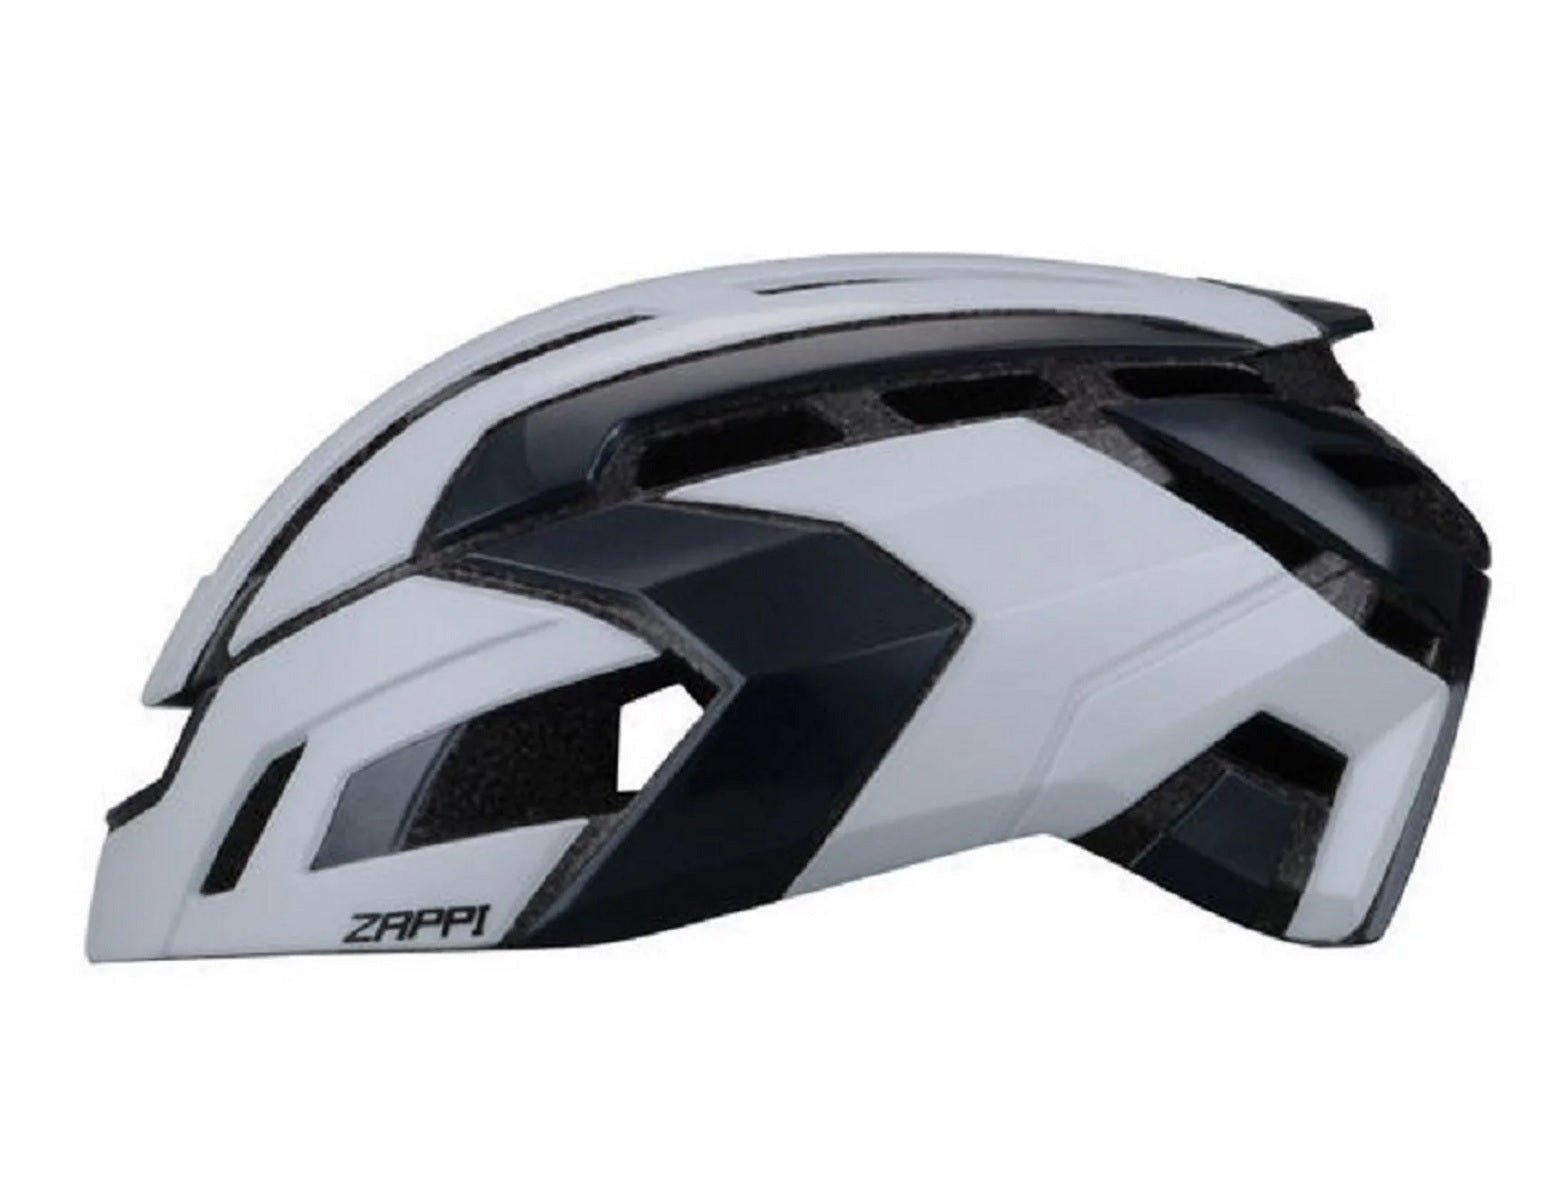 NOW ZAPPI Bike Cycling Helmet - Aerodynamic Bicycle White/Black S/M